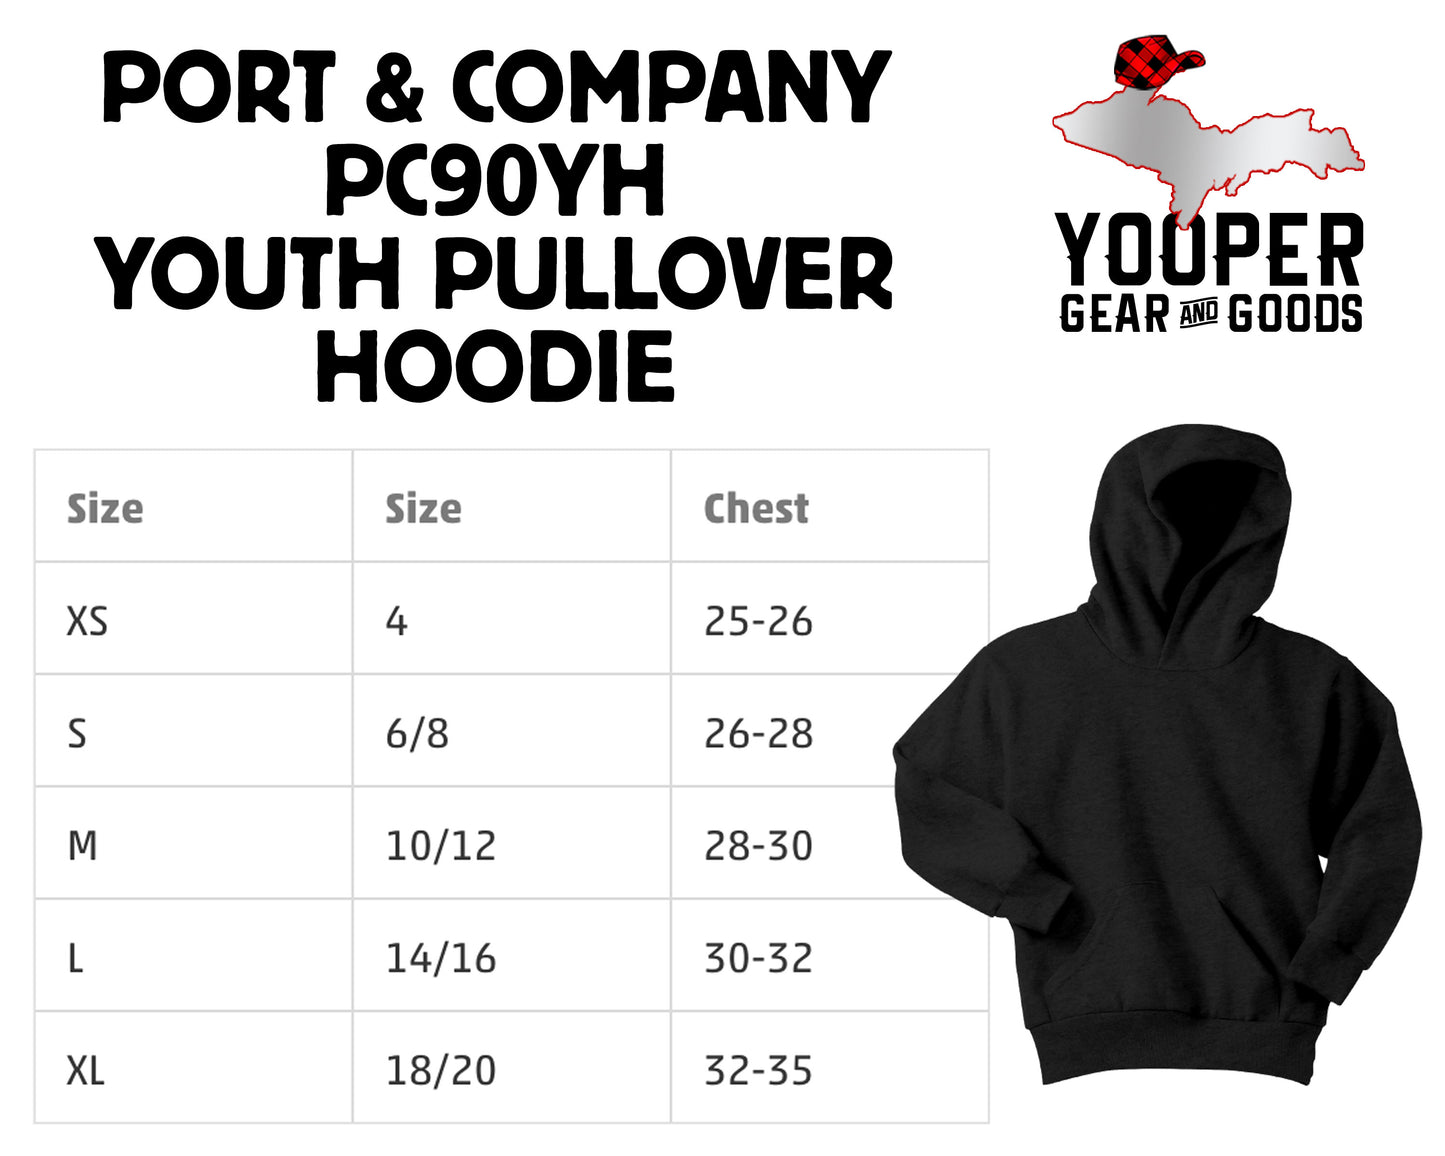 Yooper Girl Youth Hoodie | Upper Michigan Hooded Sweatshirt for Girls